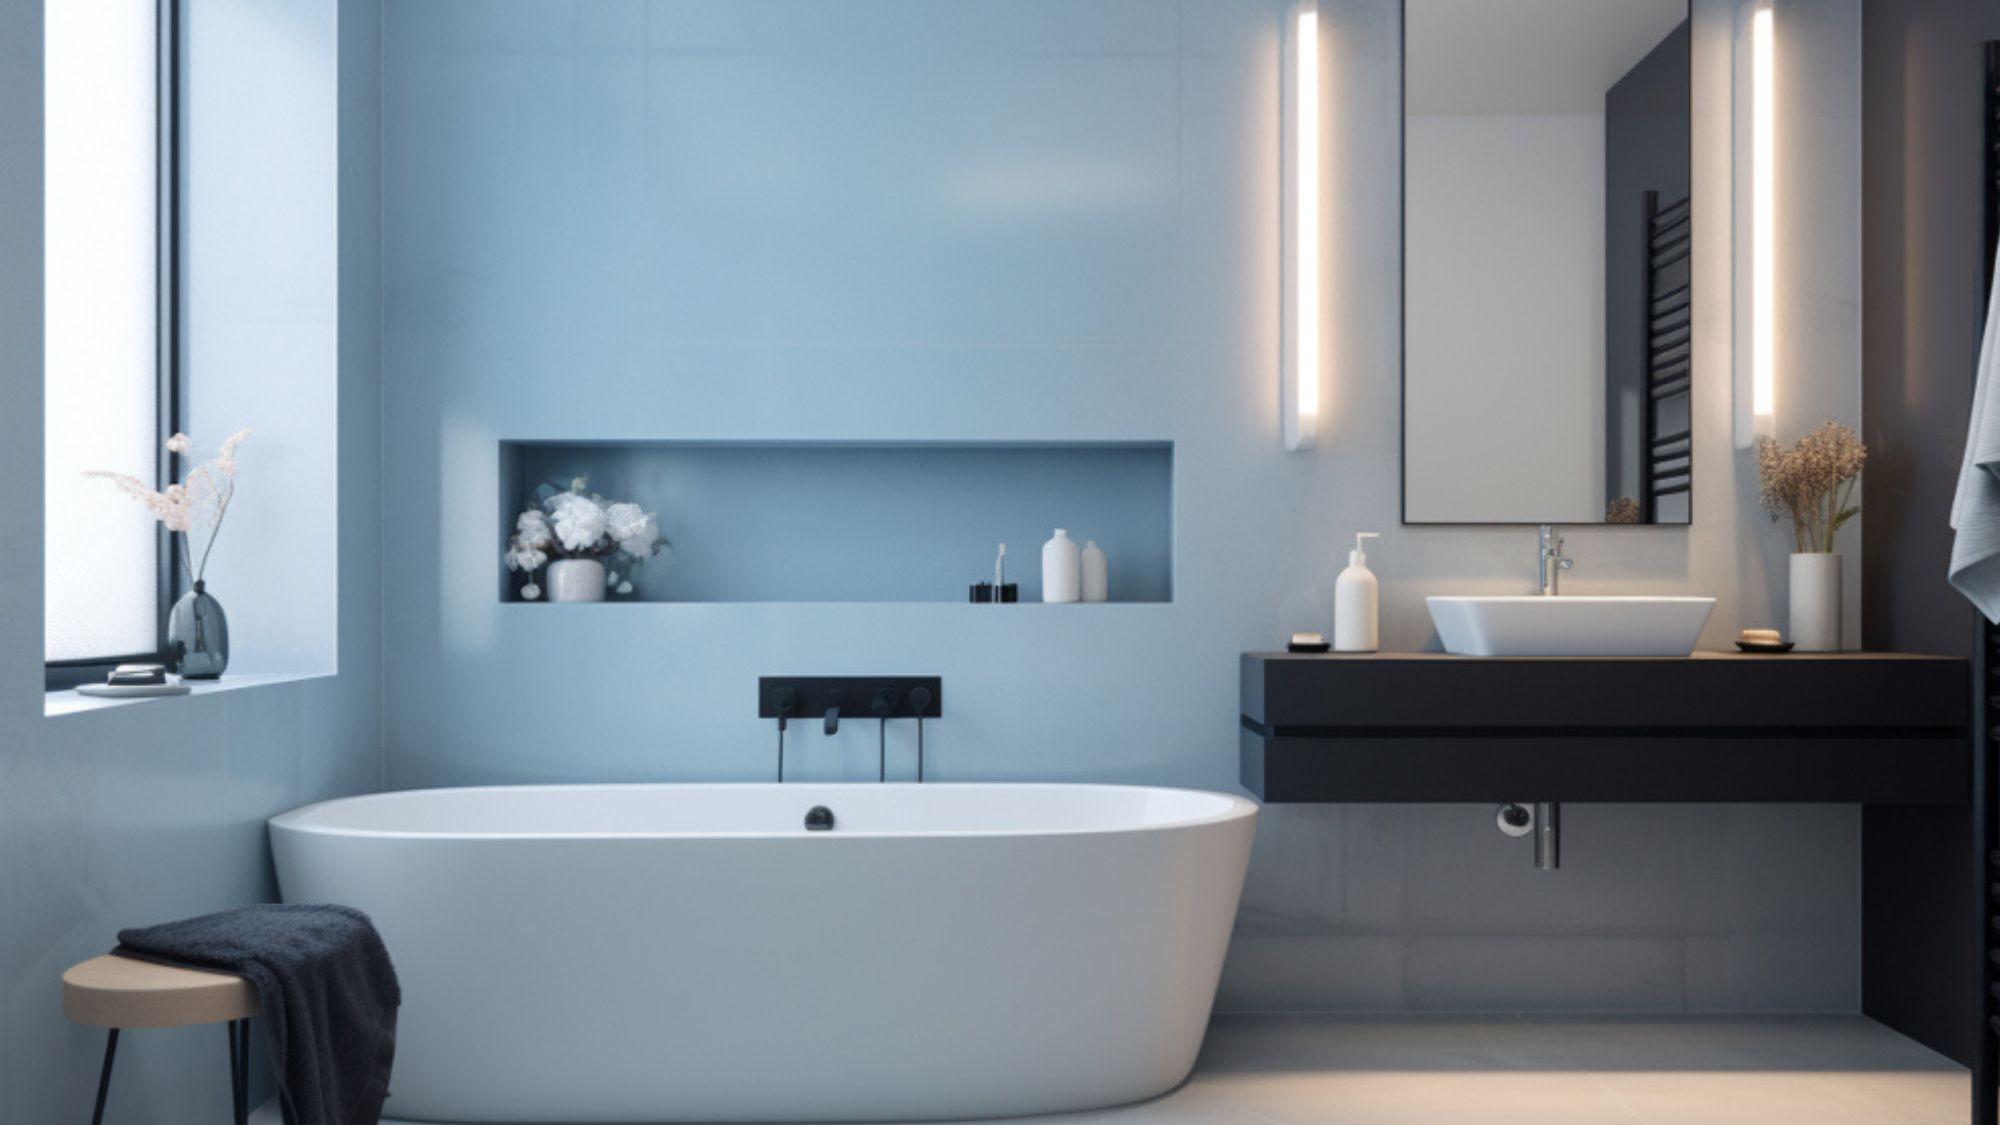 Luxury bathroom with white walls and a sleek black bathtub and perfect lighting